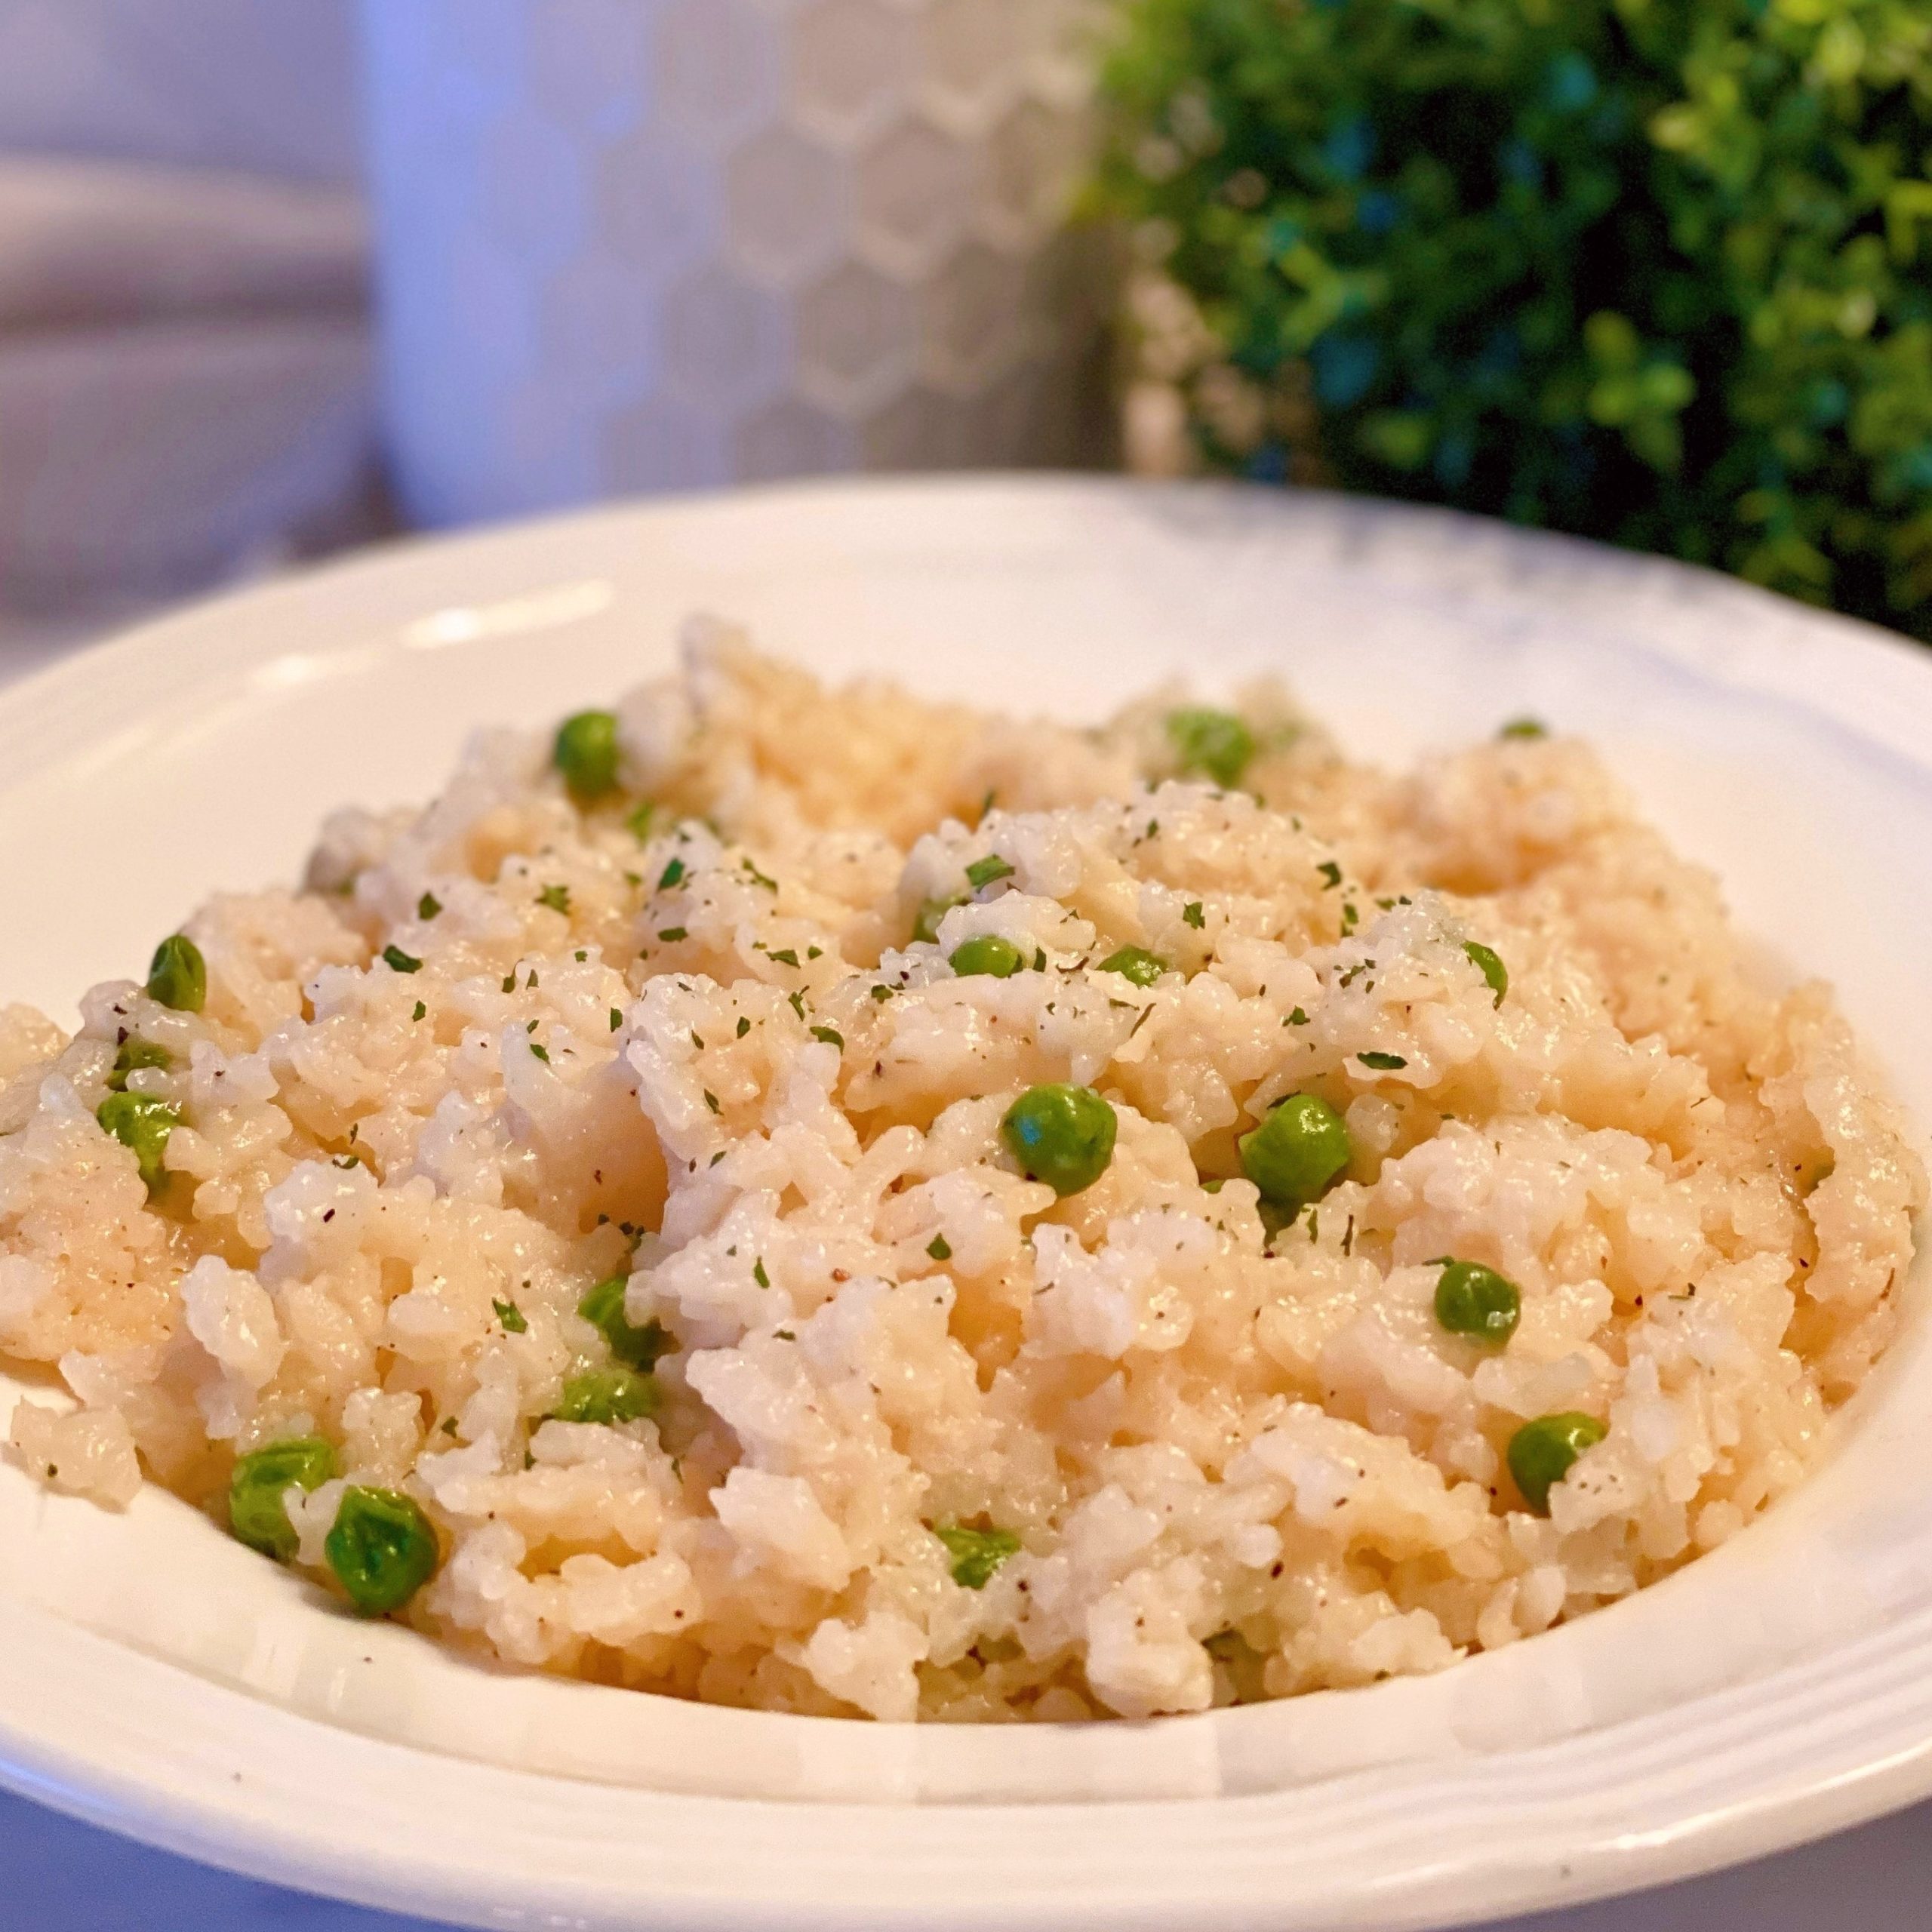 Instant Pot Parmesan Rice and Peas - The Recipe Pot